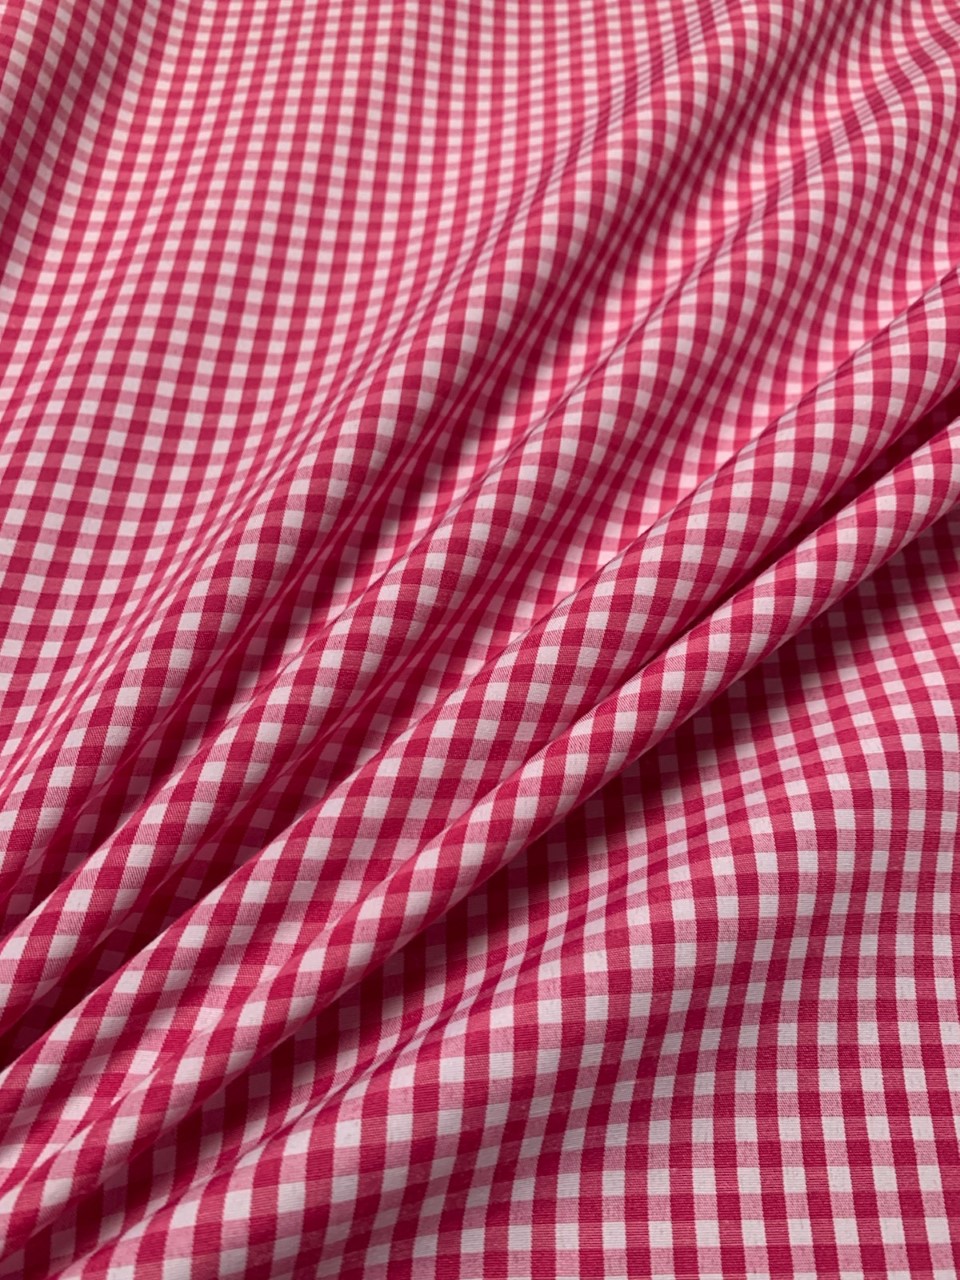 1/8" Fuchsia Gingham Fabric 60" Wide Per Yard Poly Cotton Blend